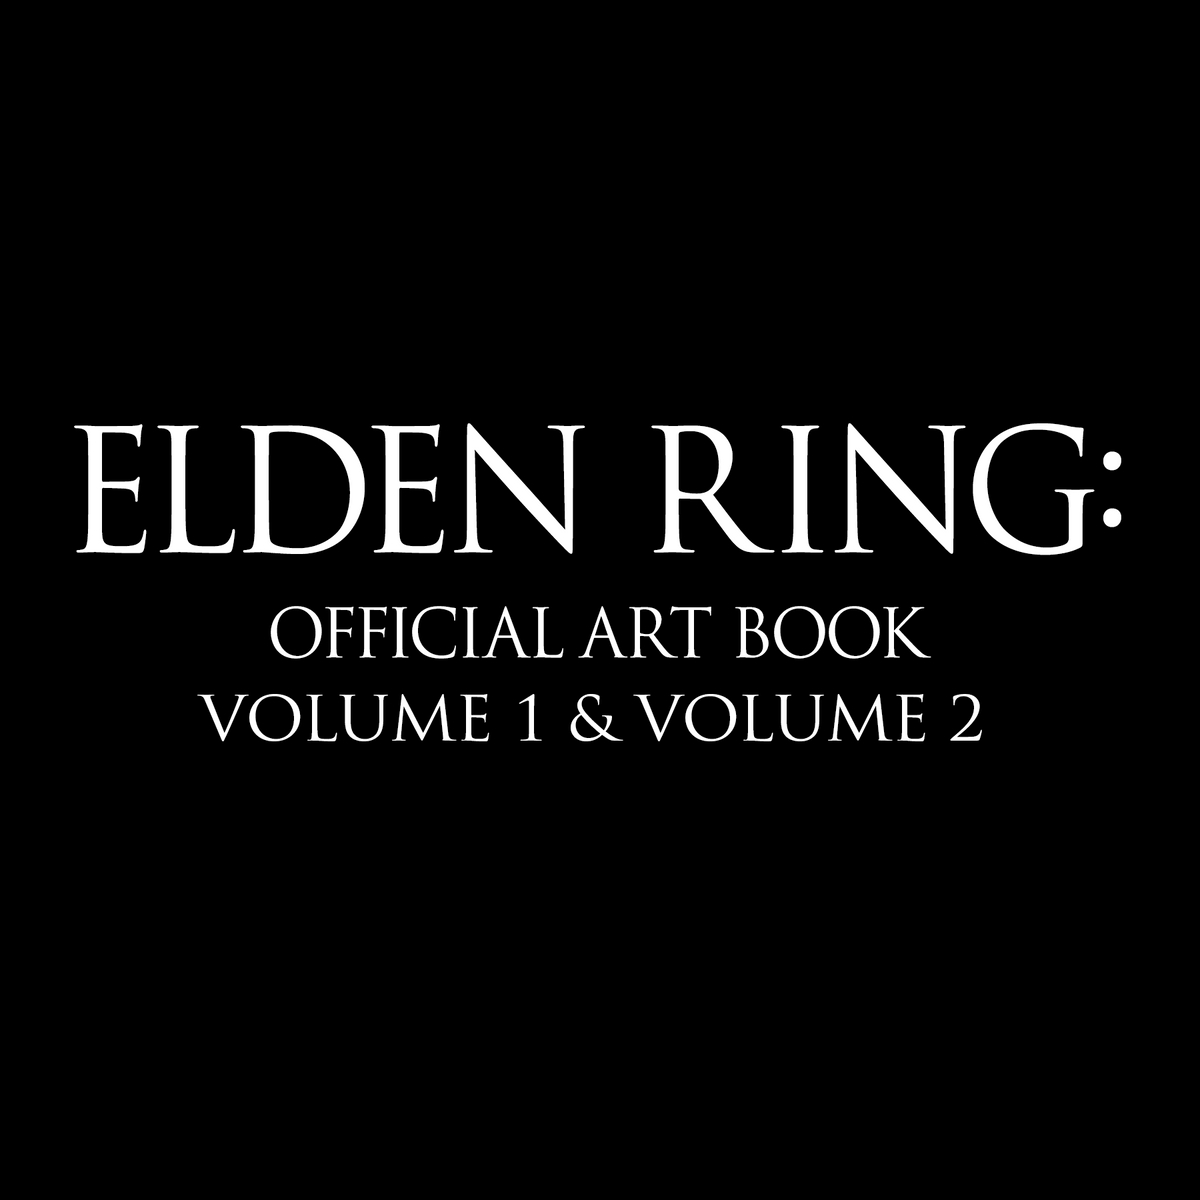 ELDEN RING OFFICIAL ART BOOK Volume I & Volume II set KADOKAWA from Japan